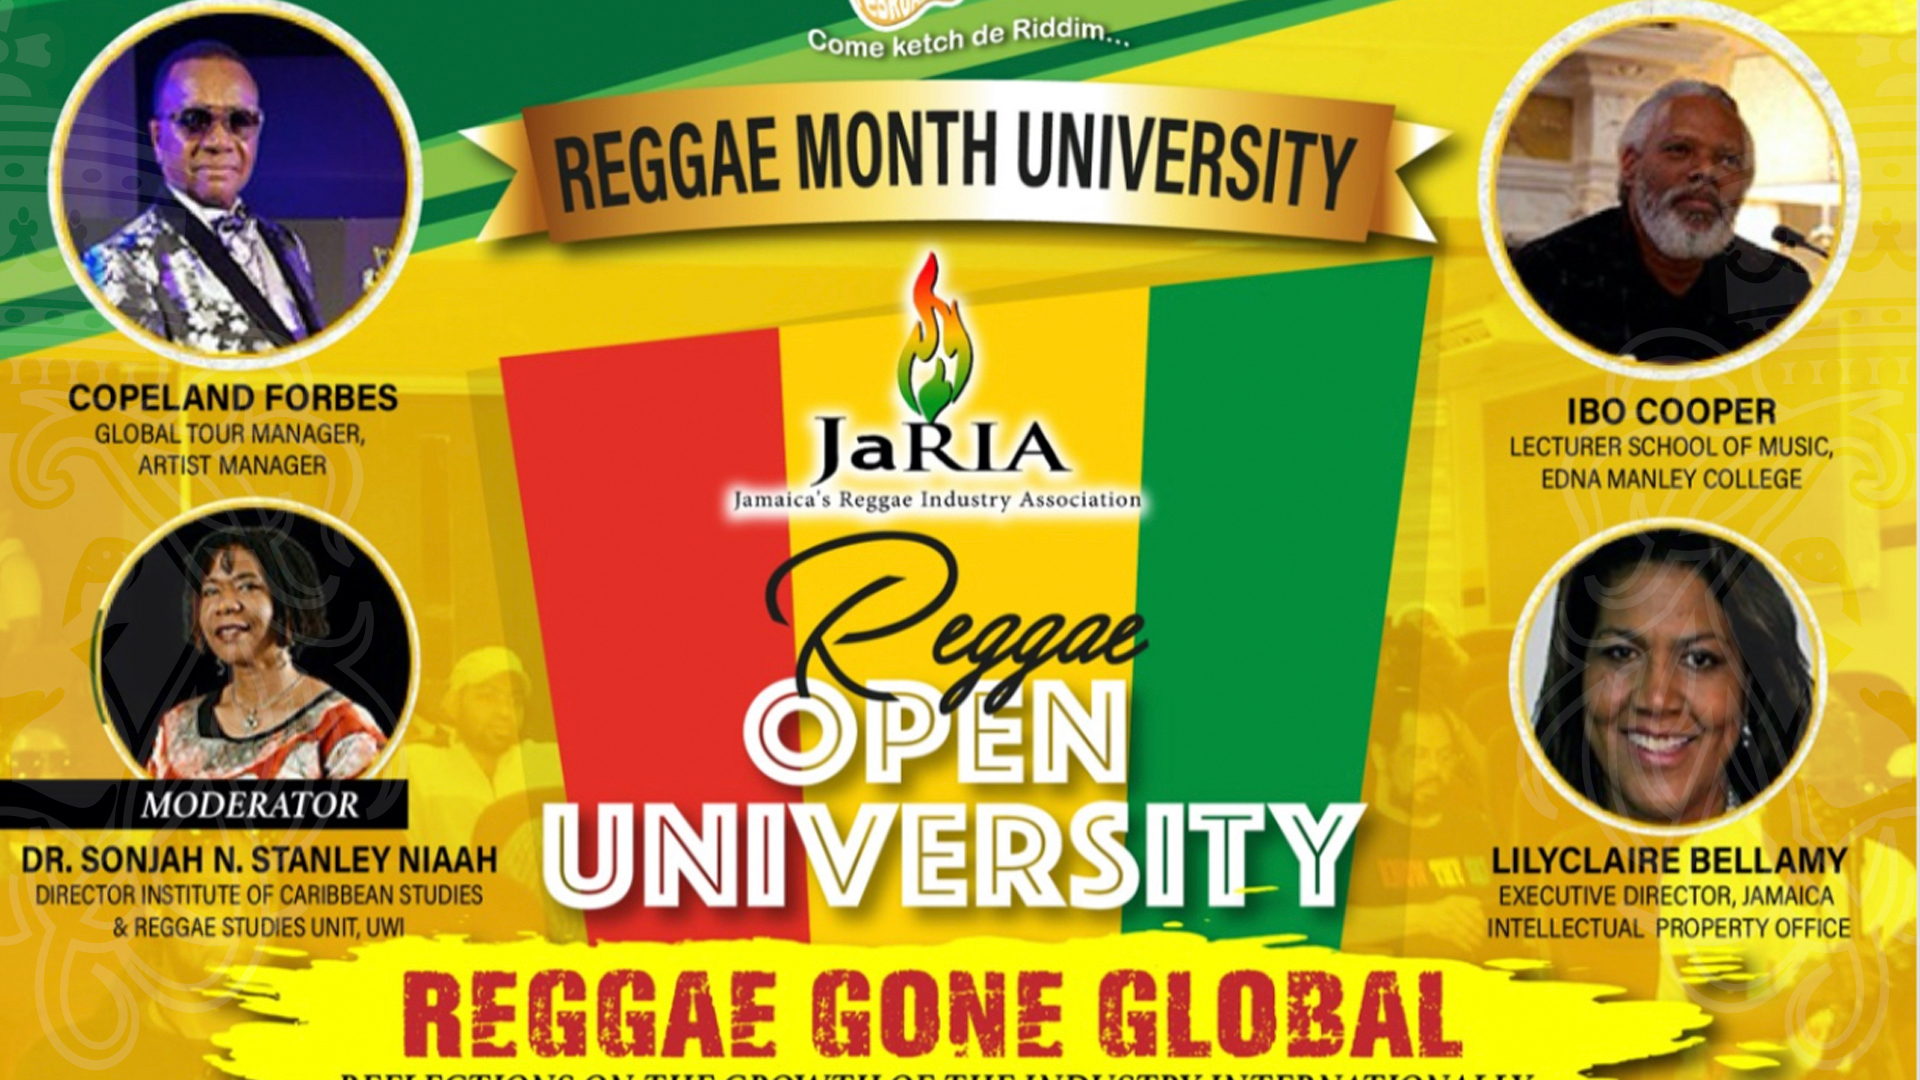 Reggae Open University